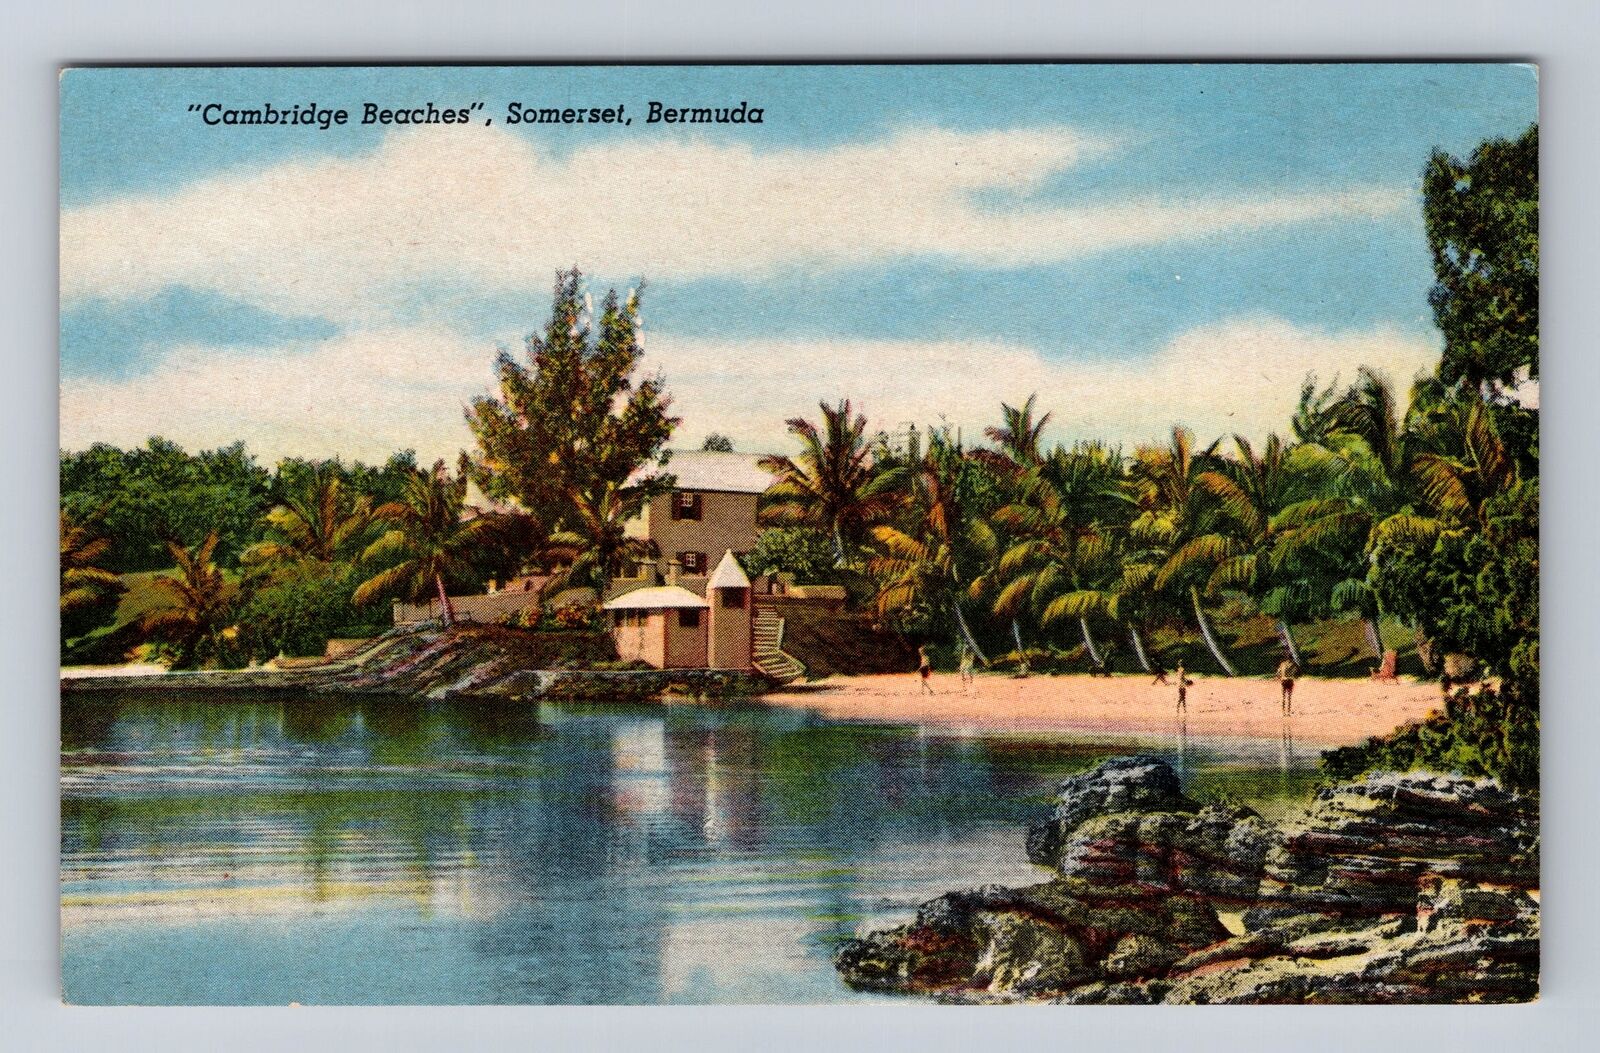 Somerset Bermuda, Cambridge Beaches, Pink Sand Beach, Antique Vintage Postcard